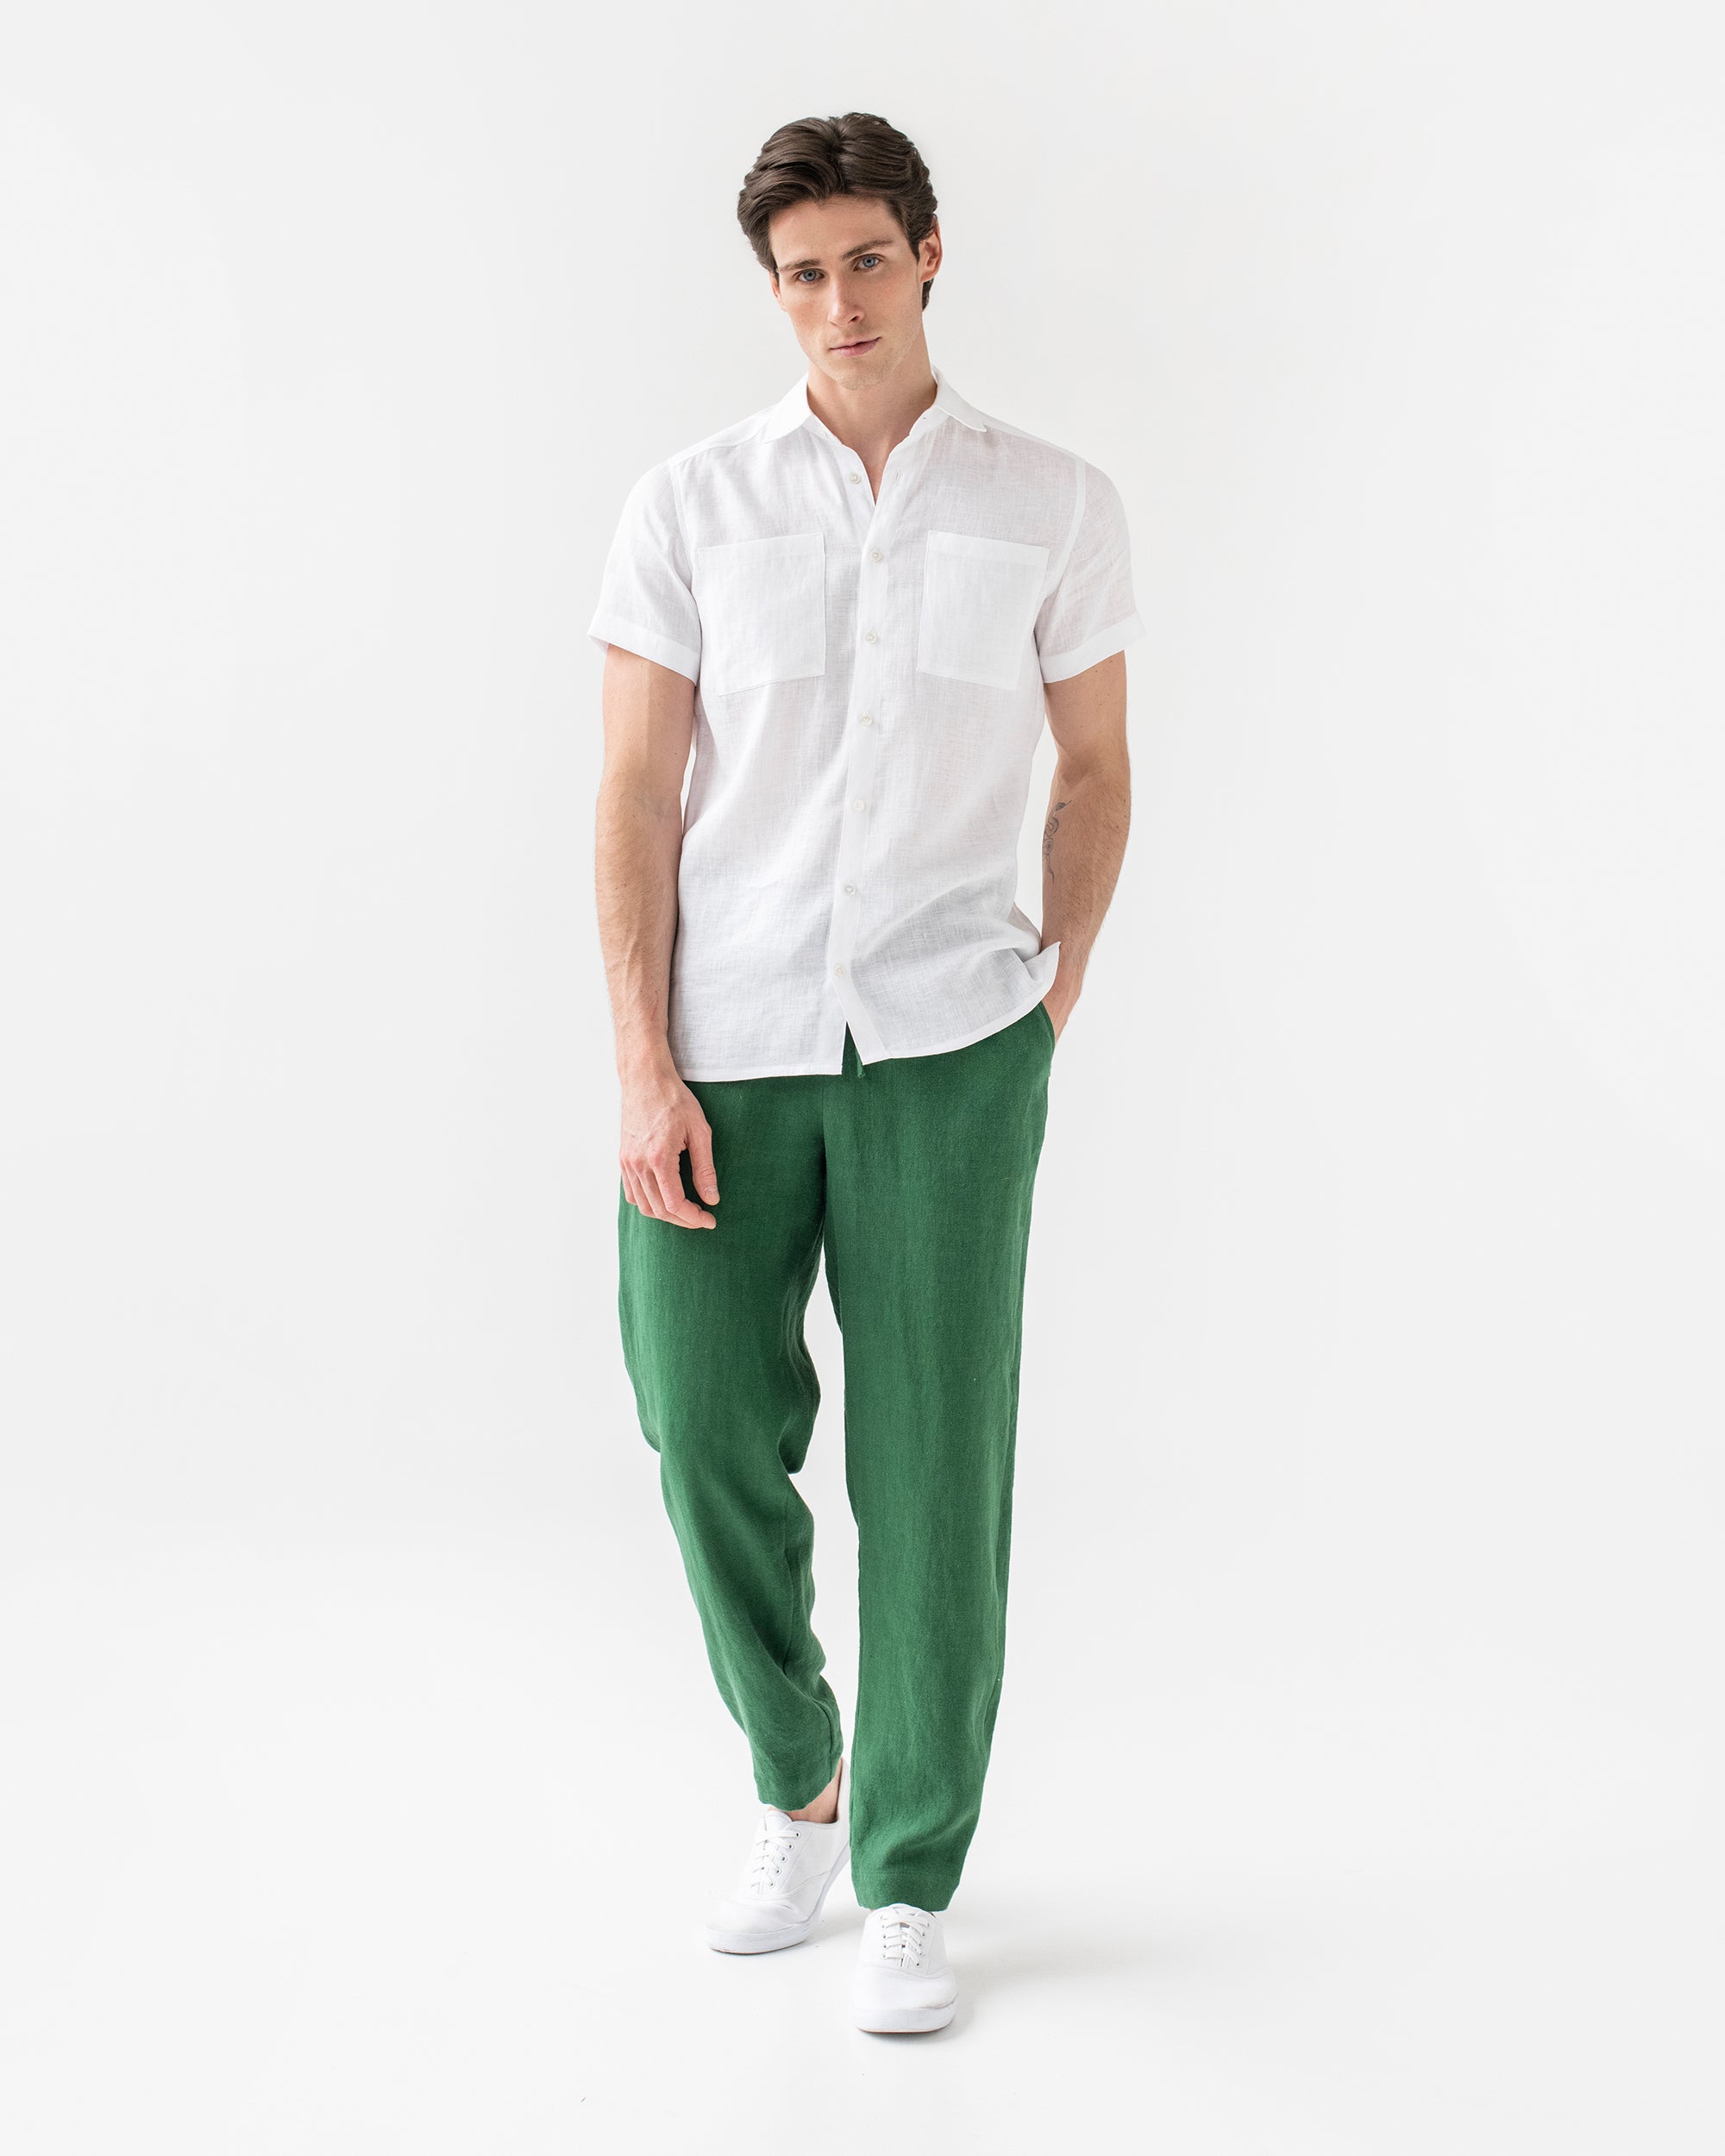 Fashion Mens Corduroy Straight Slim Pants Loose Casual Trousers Dress Pants  New | eBay